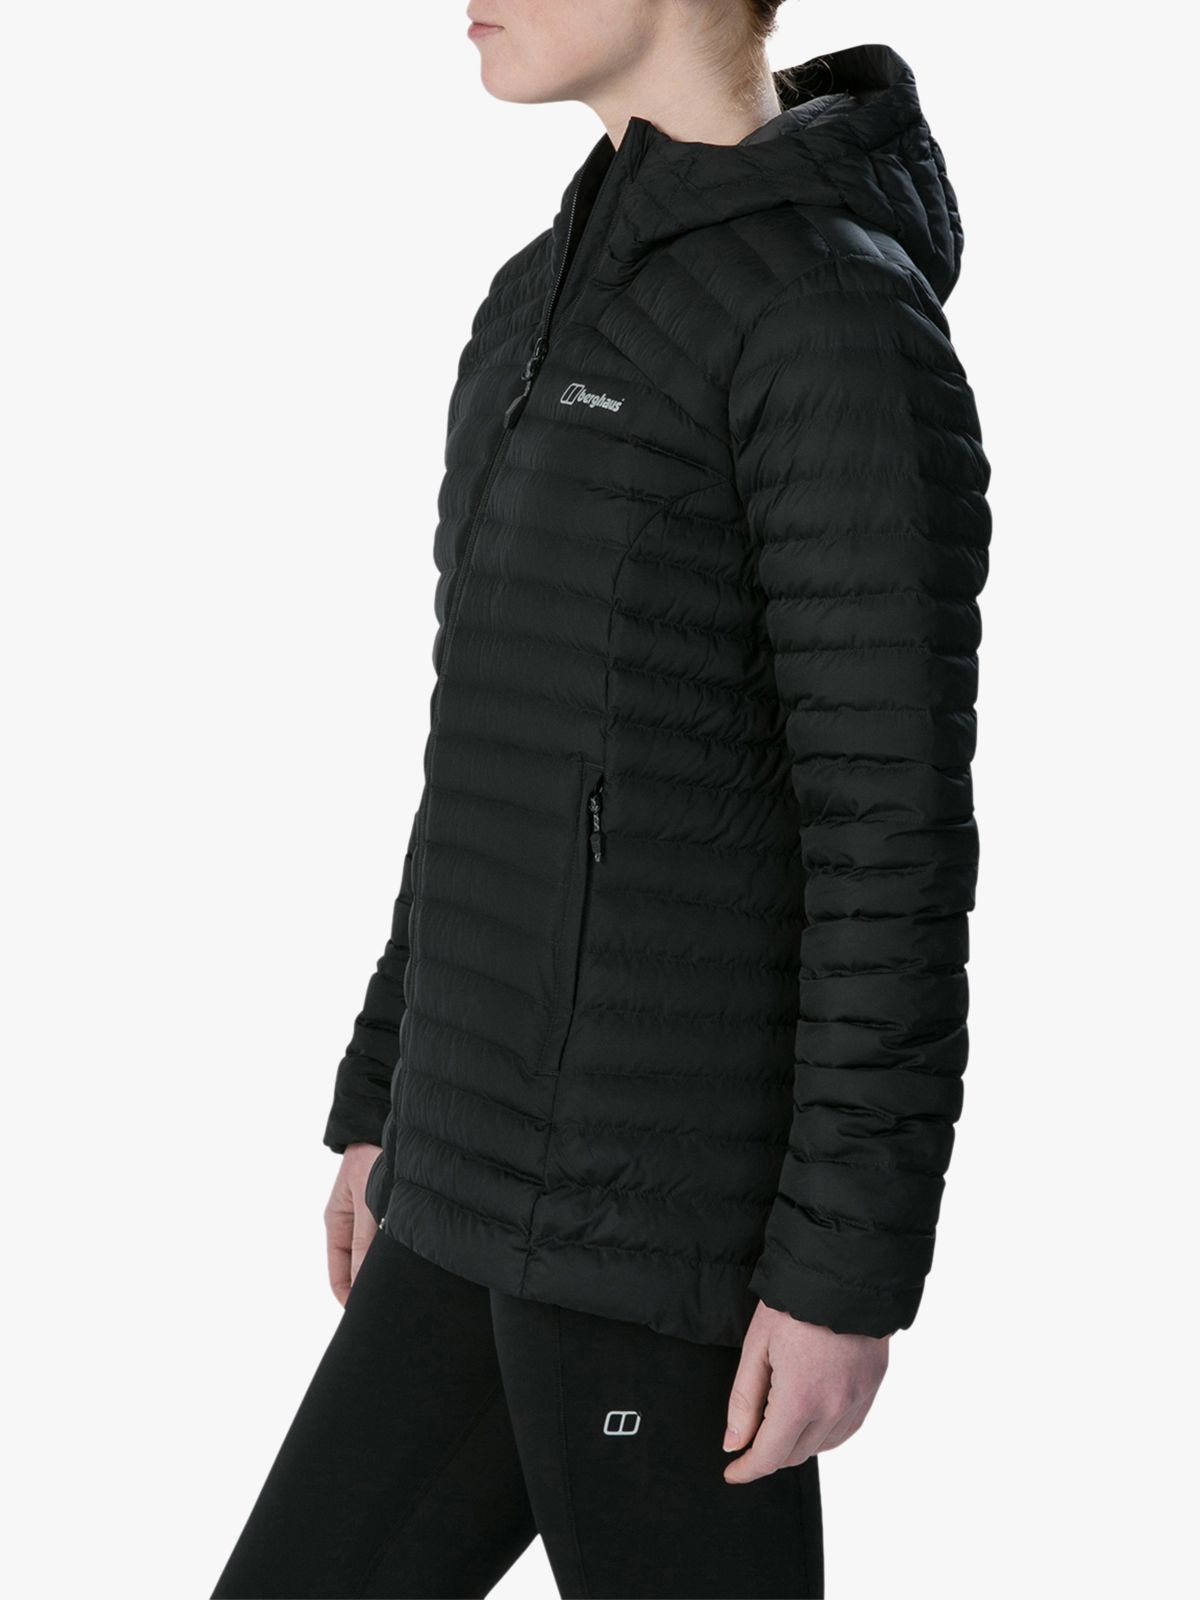 Nula Micro Jacket by Berghaus